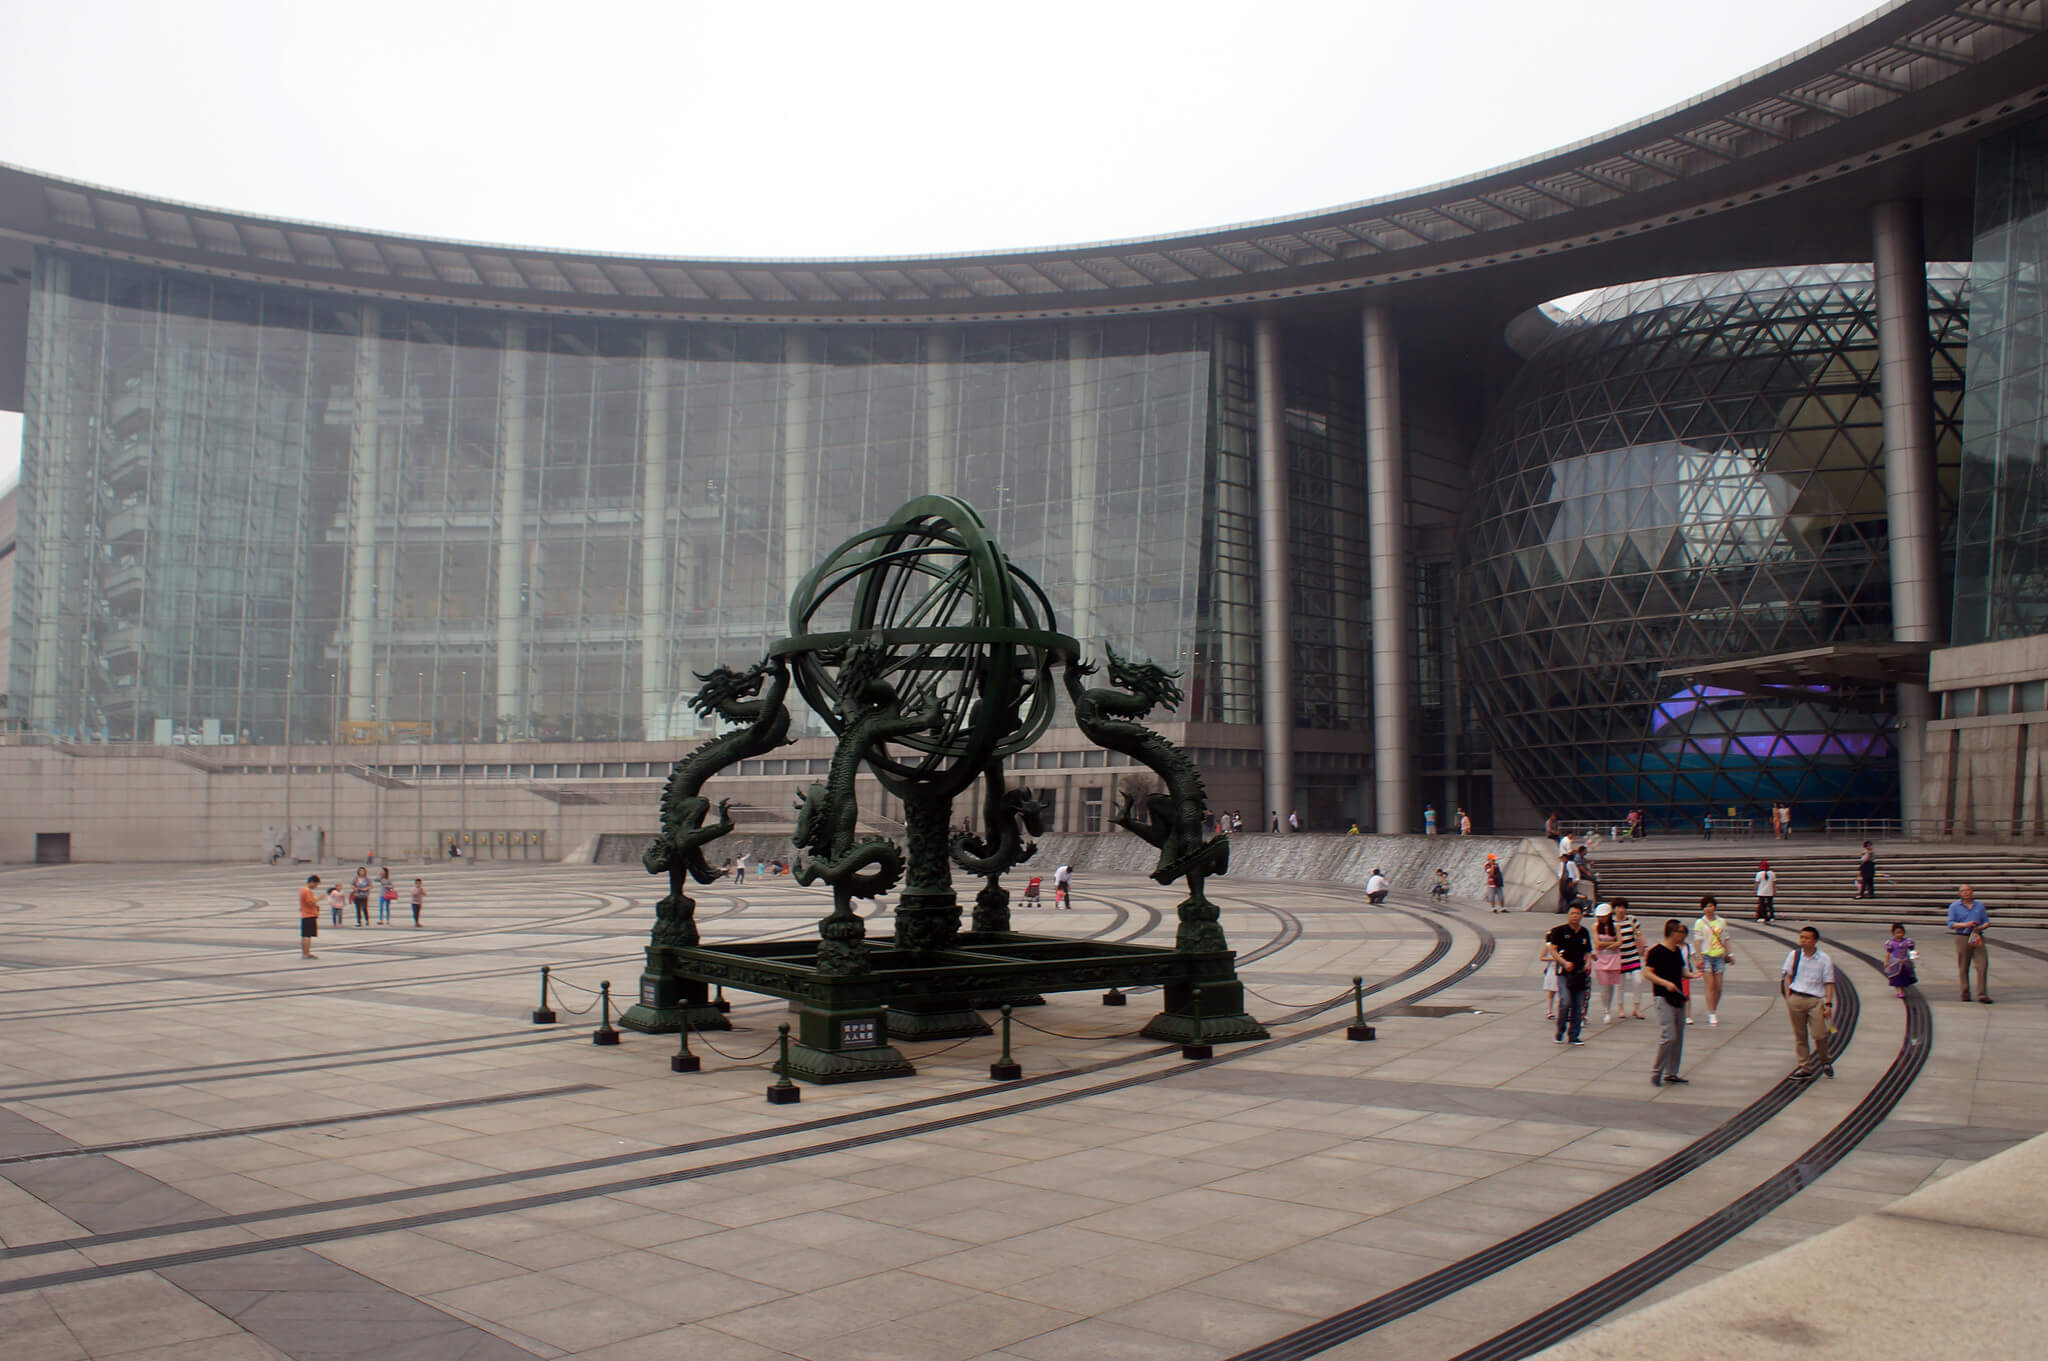 VanderLugt-Shanghai Tech Museum in 2014. Spezz - Flickr